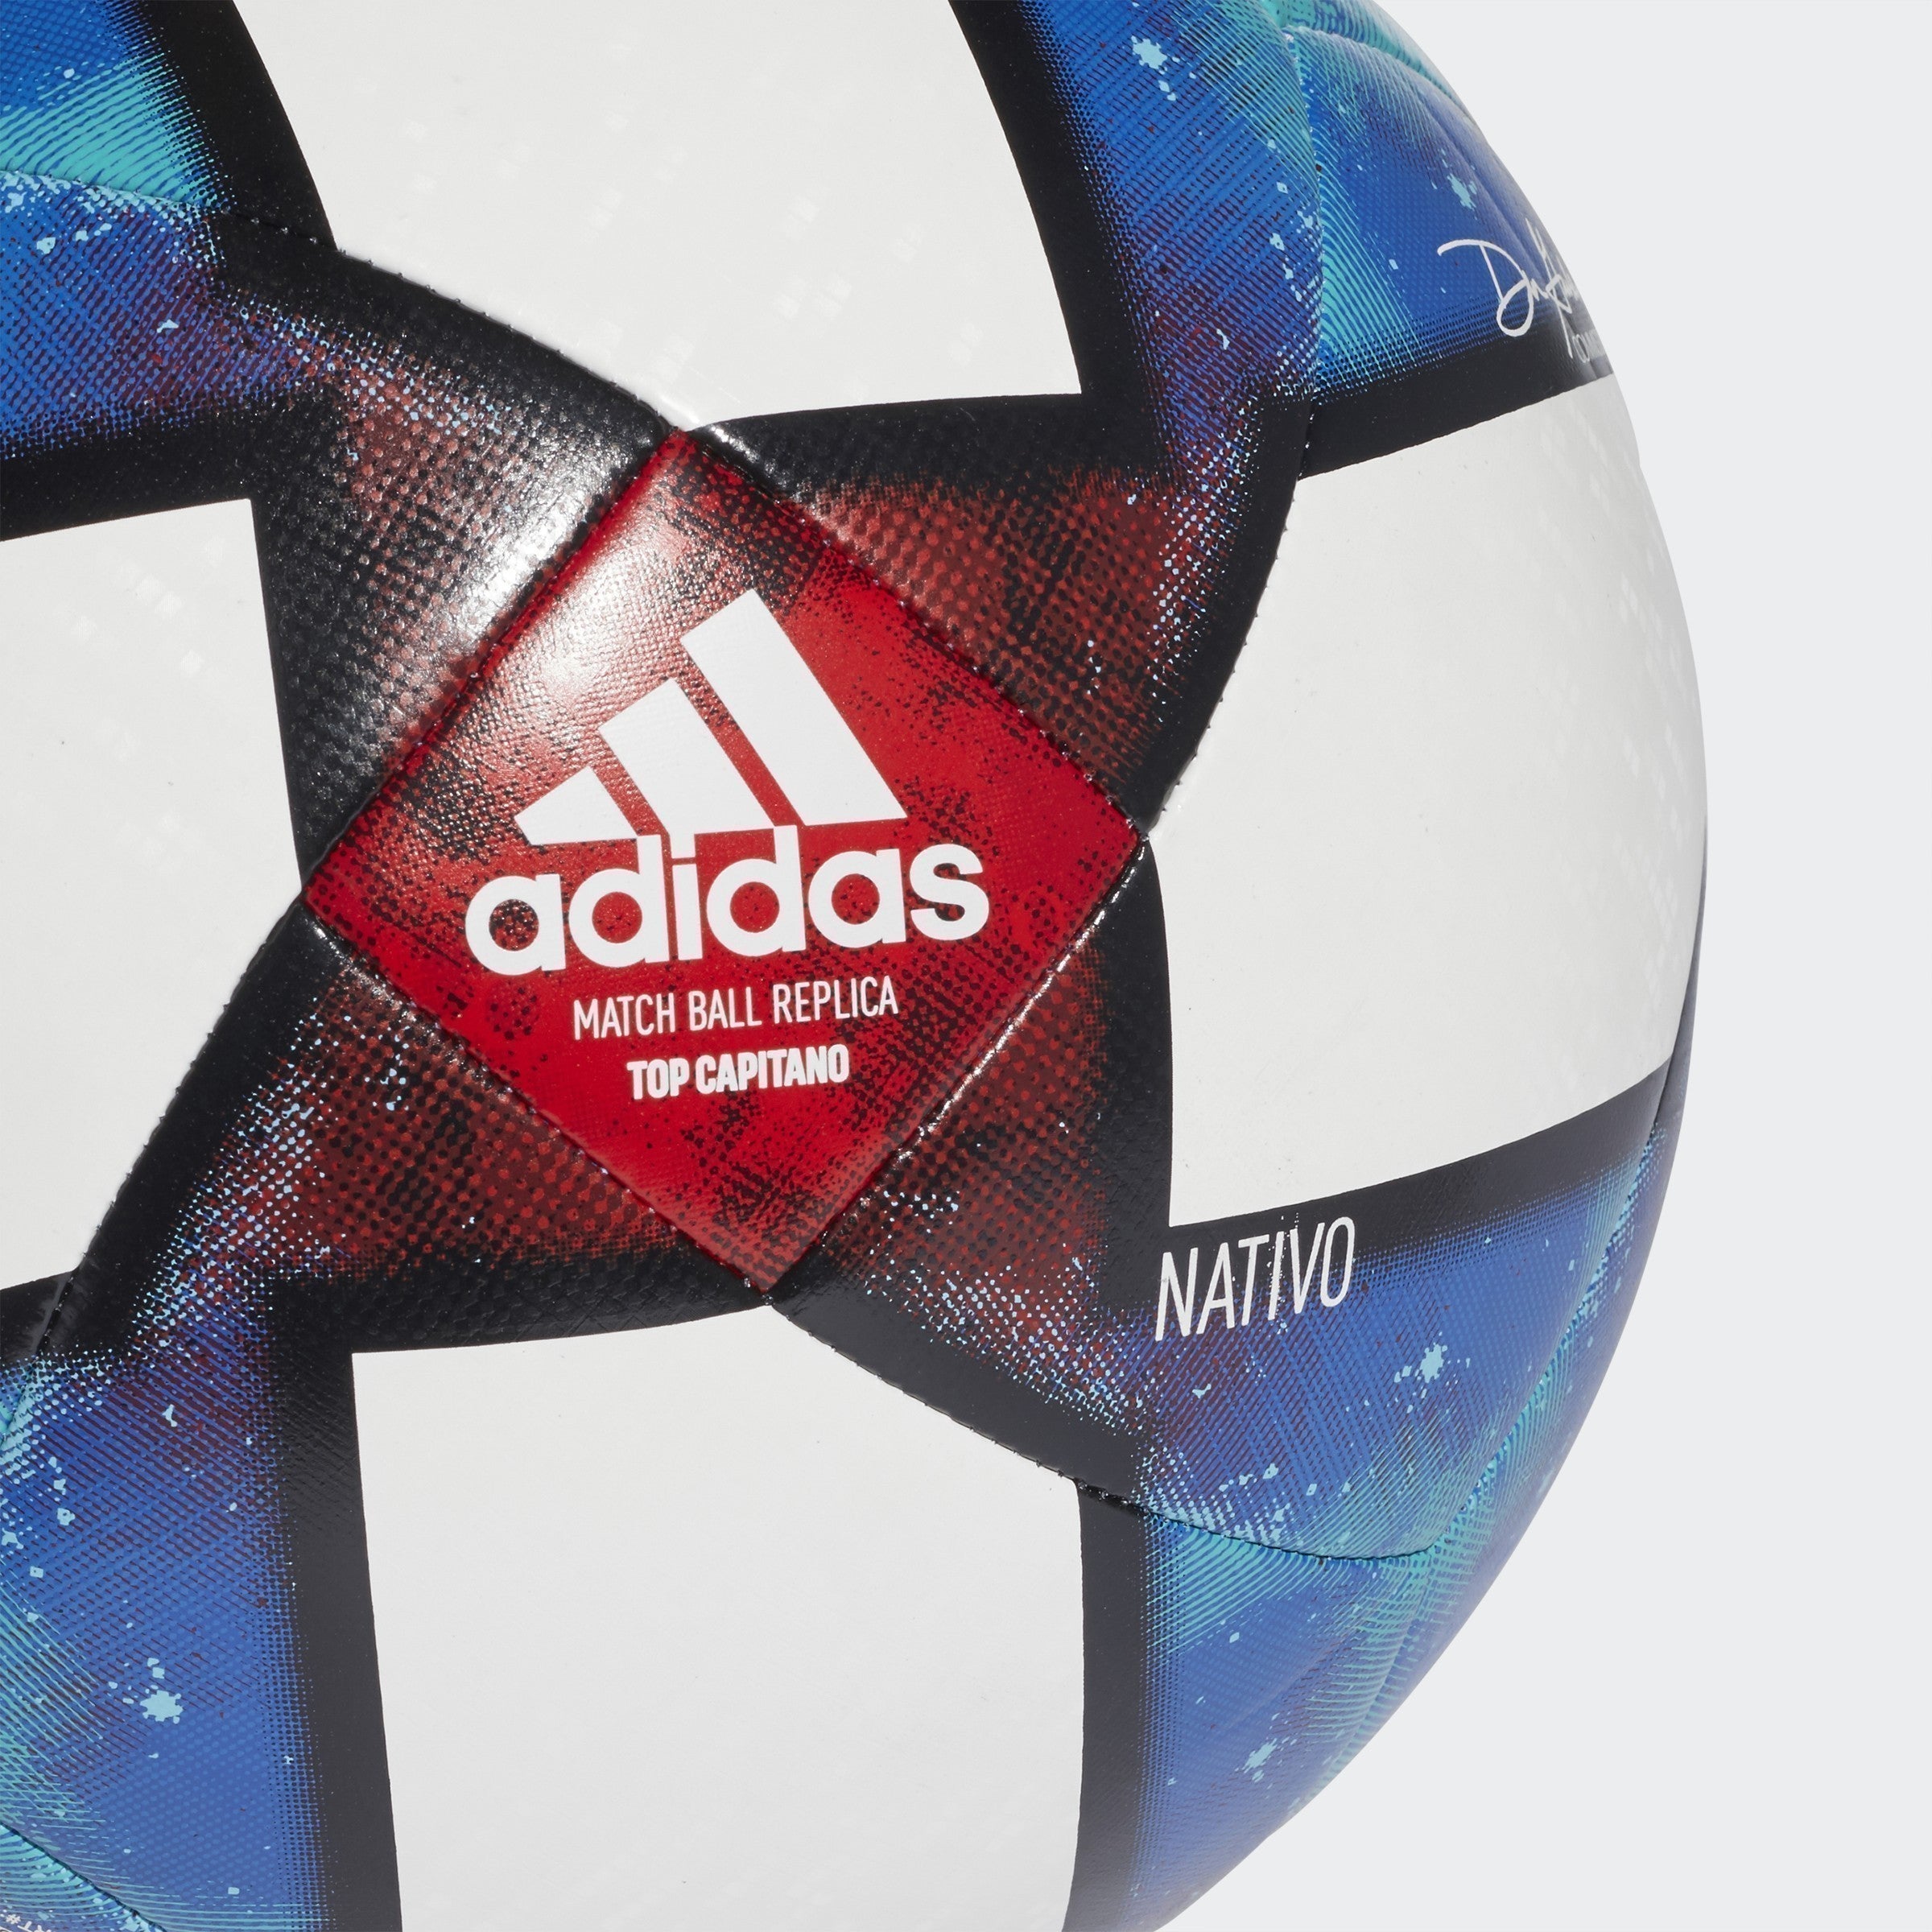 adidas mls 2019 capitano soccer ball review